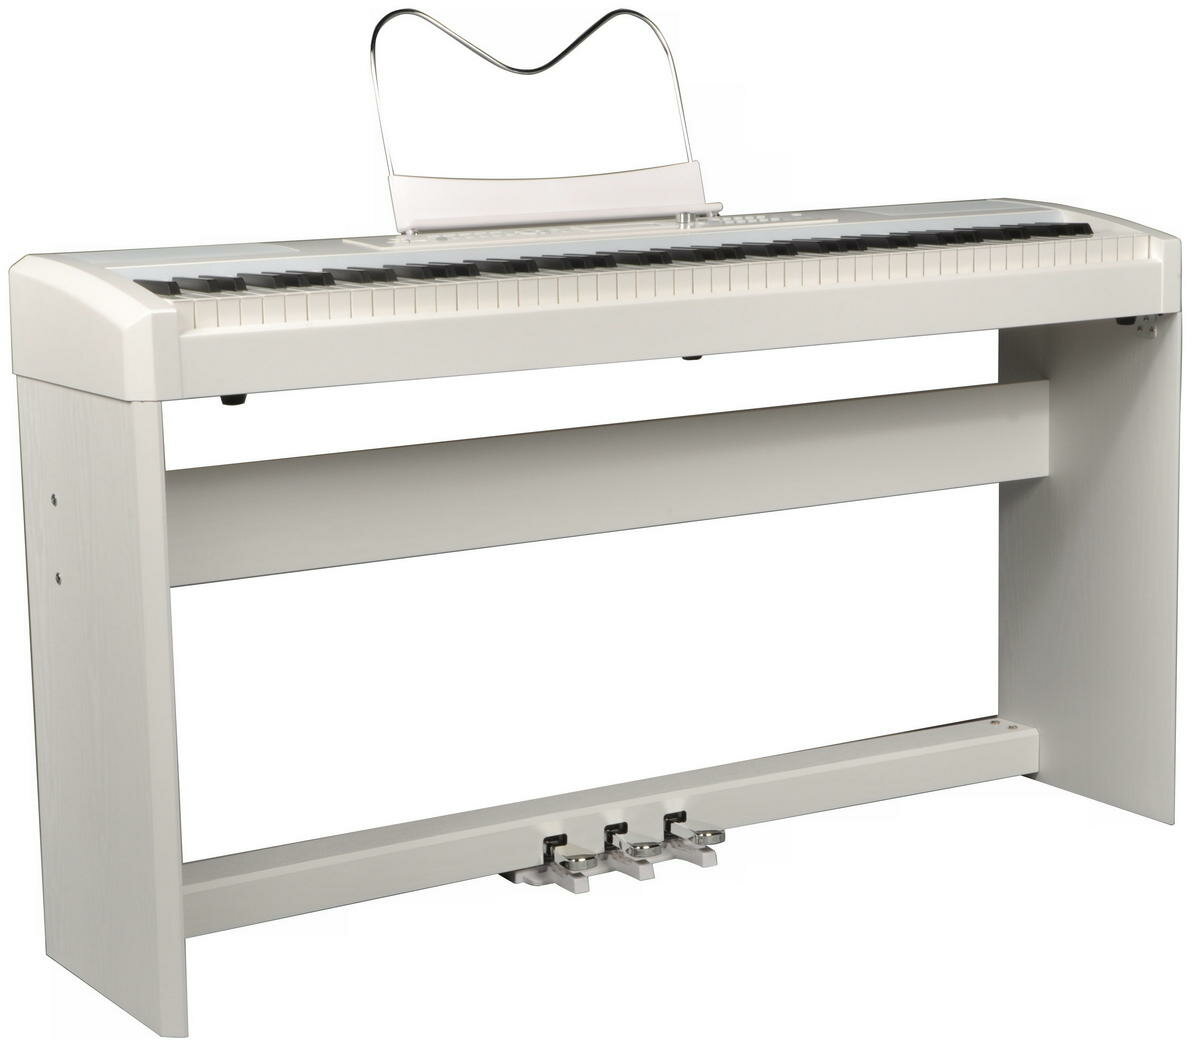 Ringway RP-35 W Цифровое пианино Клавиатура: 88 полноразмерных динам молоточк клавиш Стойка S-25